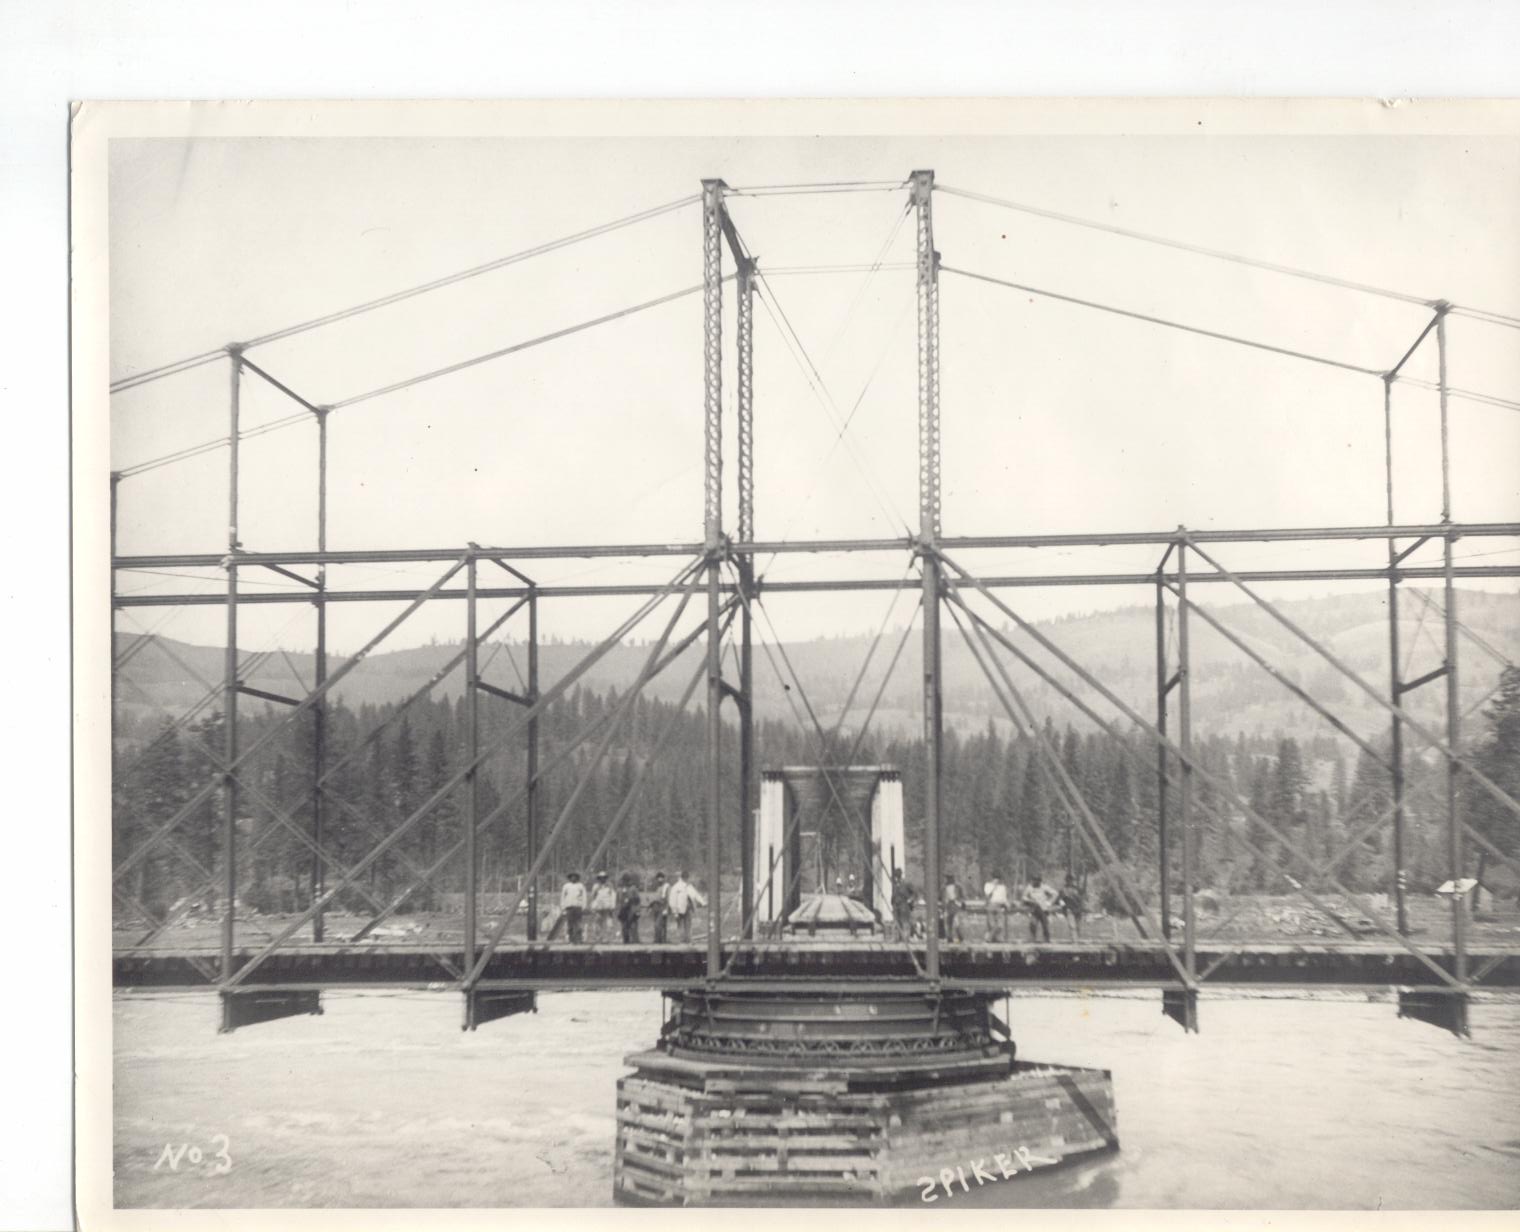 1898 - The Railroad arrives - Swinging bridge